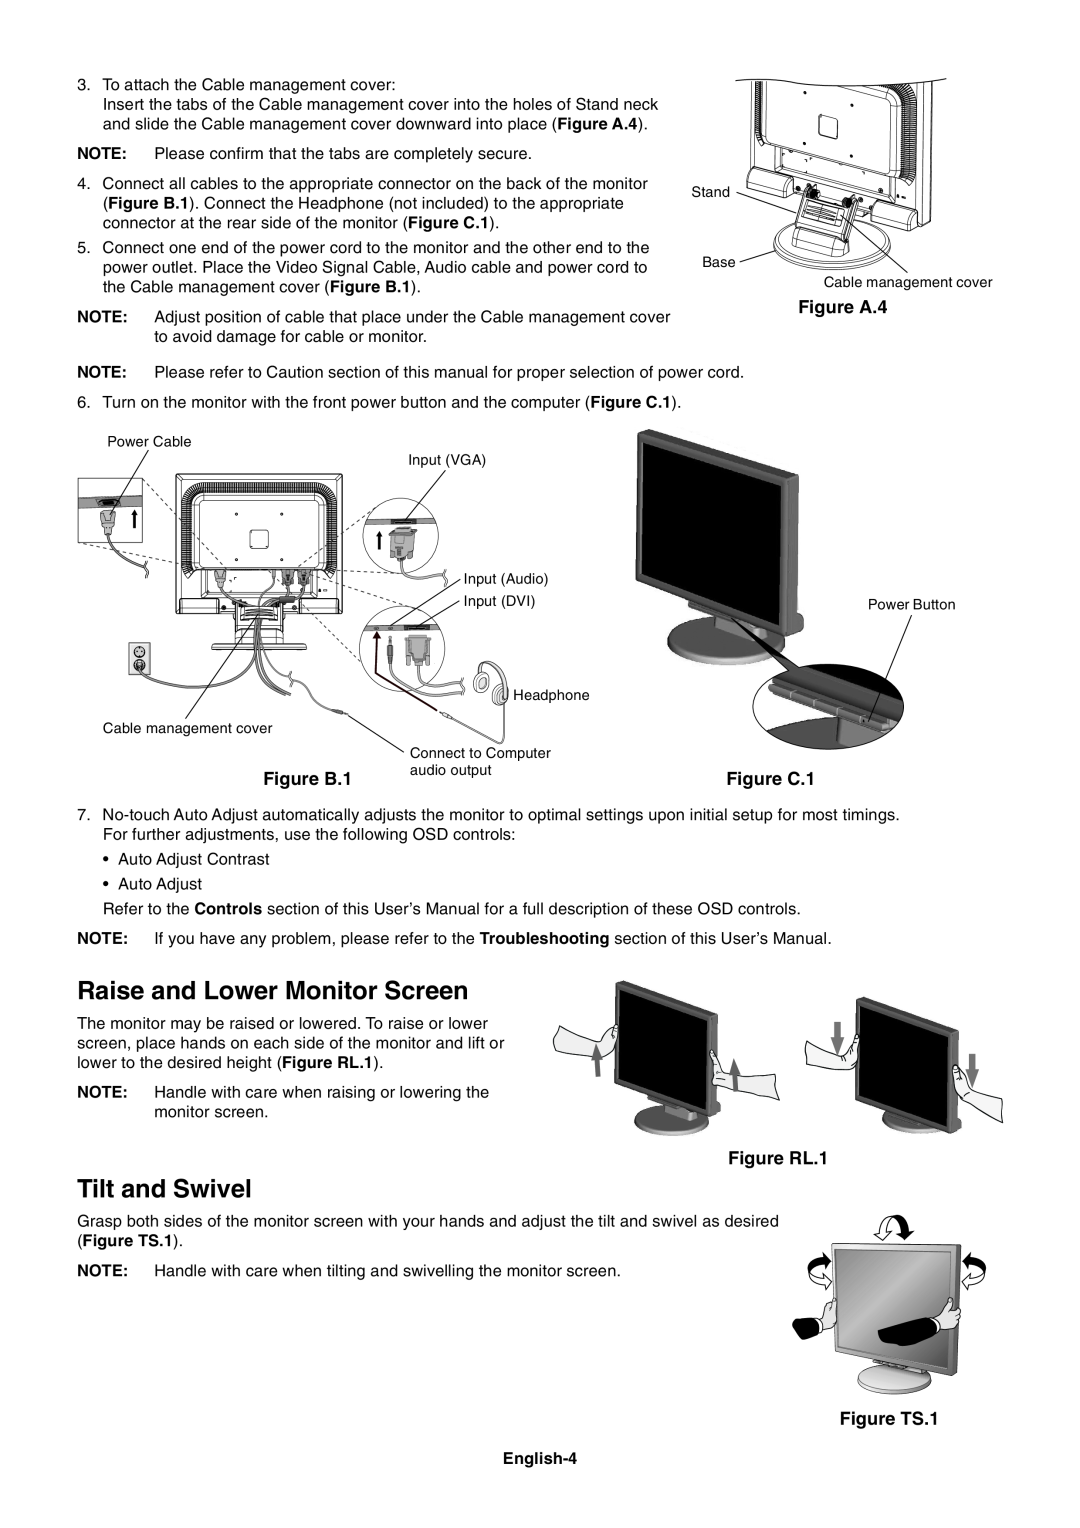 NEC LCD1970NX user manual Raise and Lower Monitor Screen, Tilt and Swivel, Figure A.4, Figure B.1, Figure C.1, Figure RL.1 